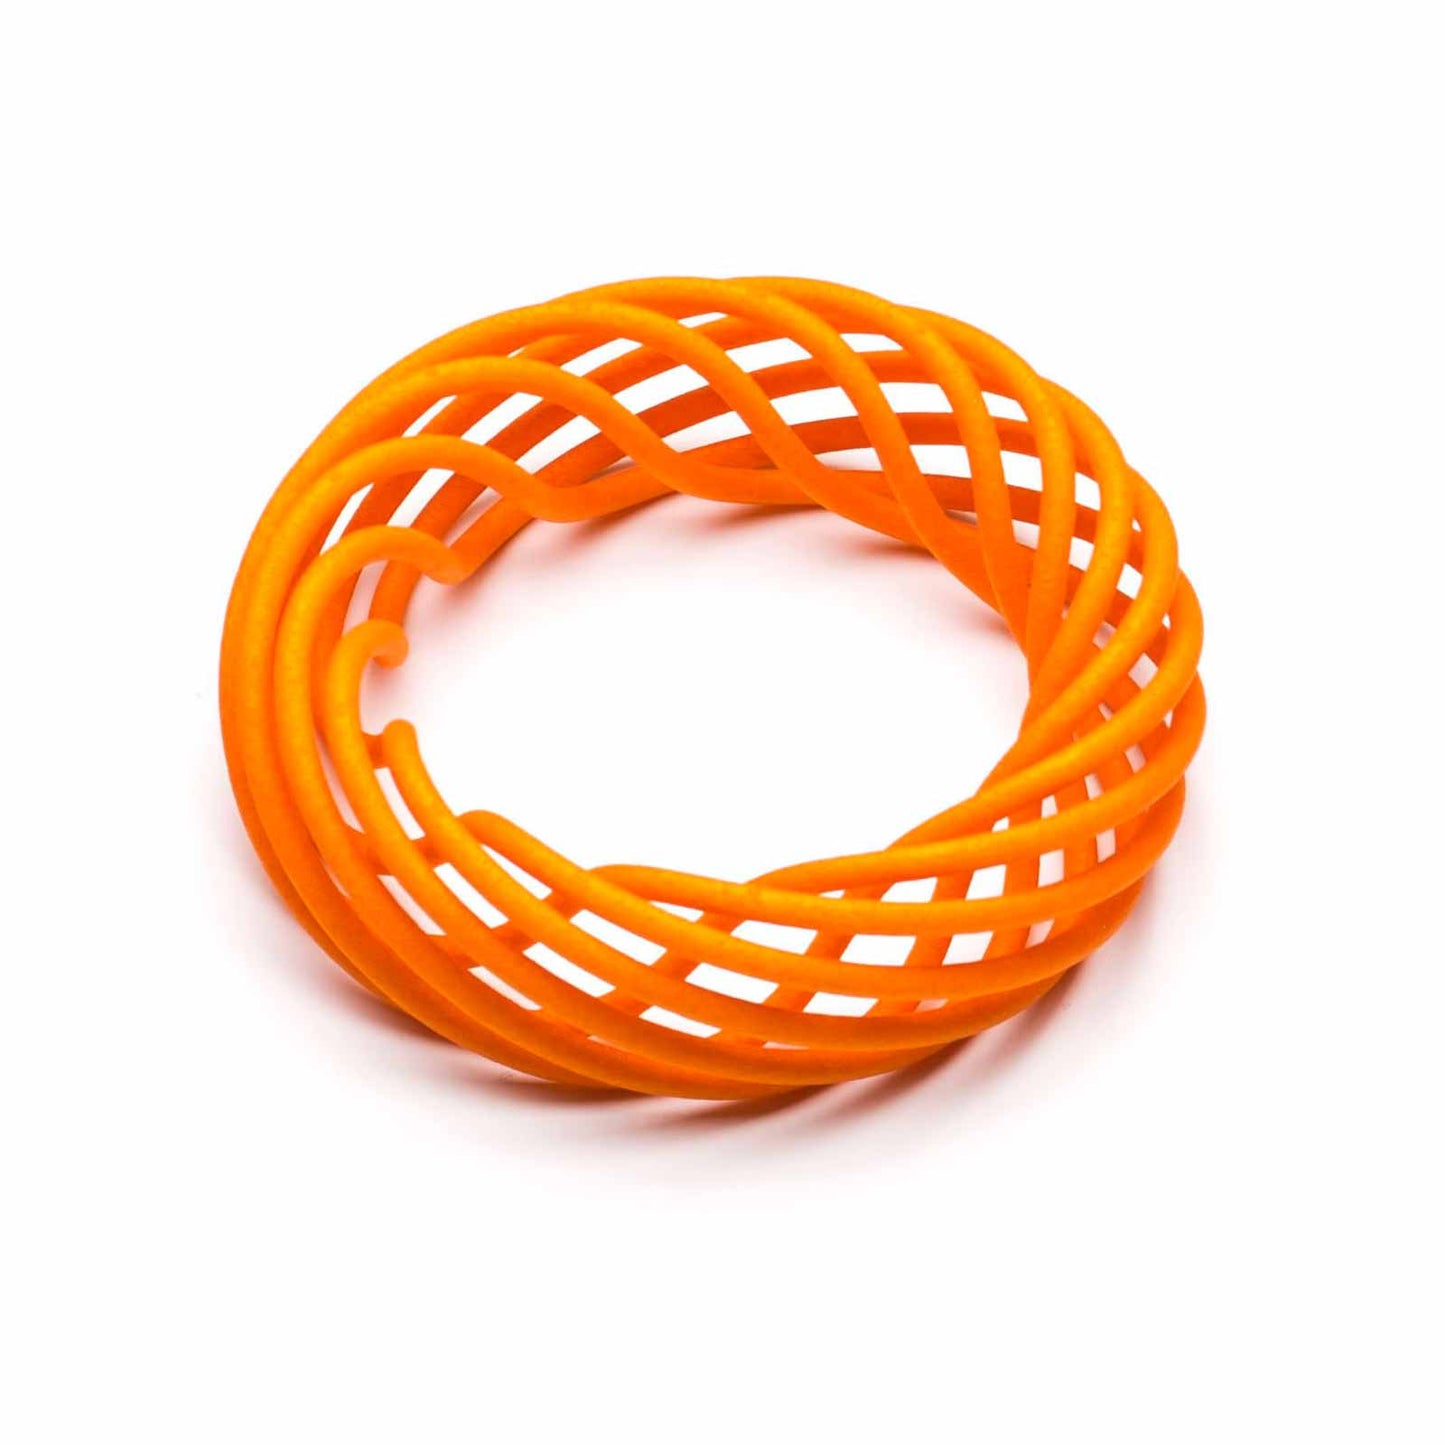 Vortex 3D printed nylon bangle in ochre